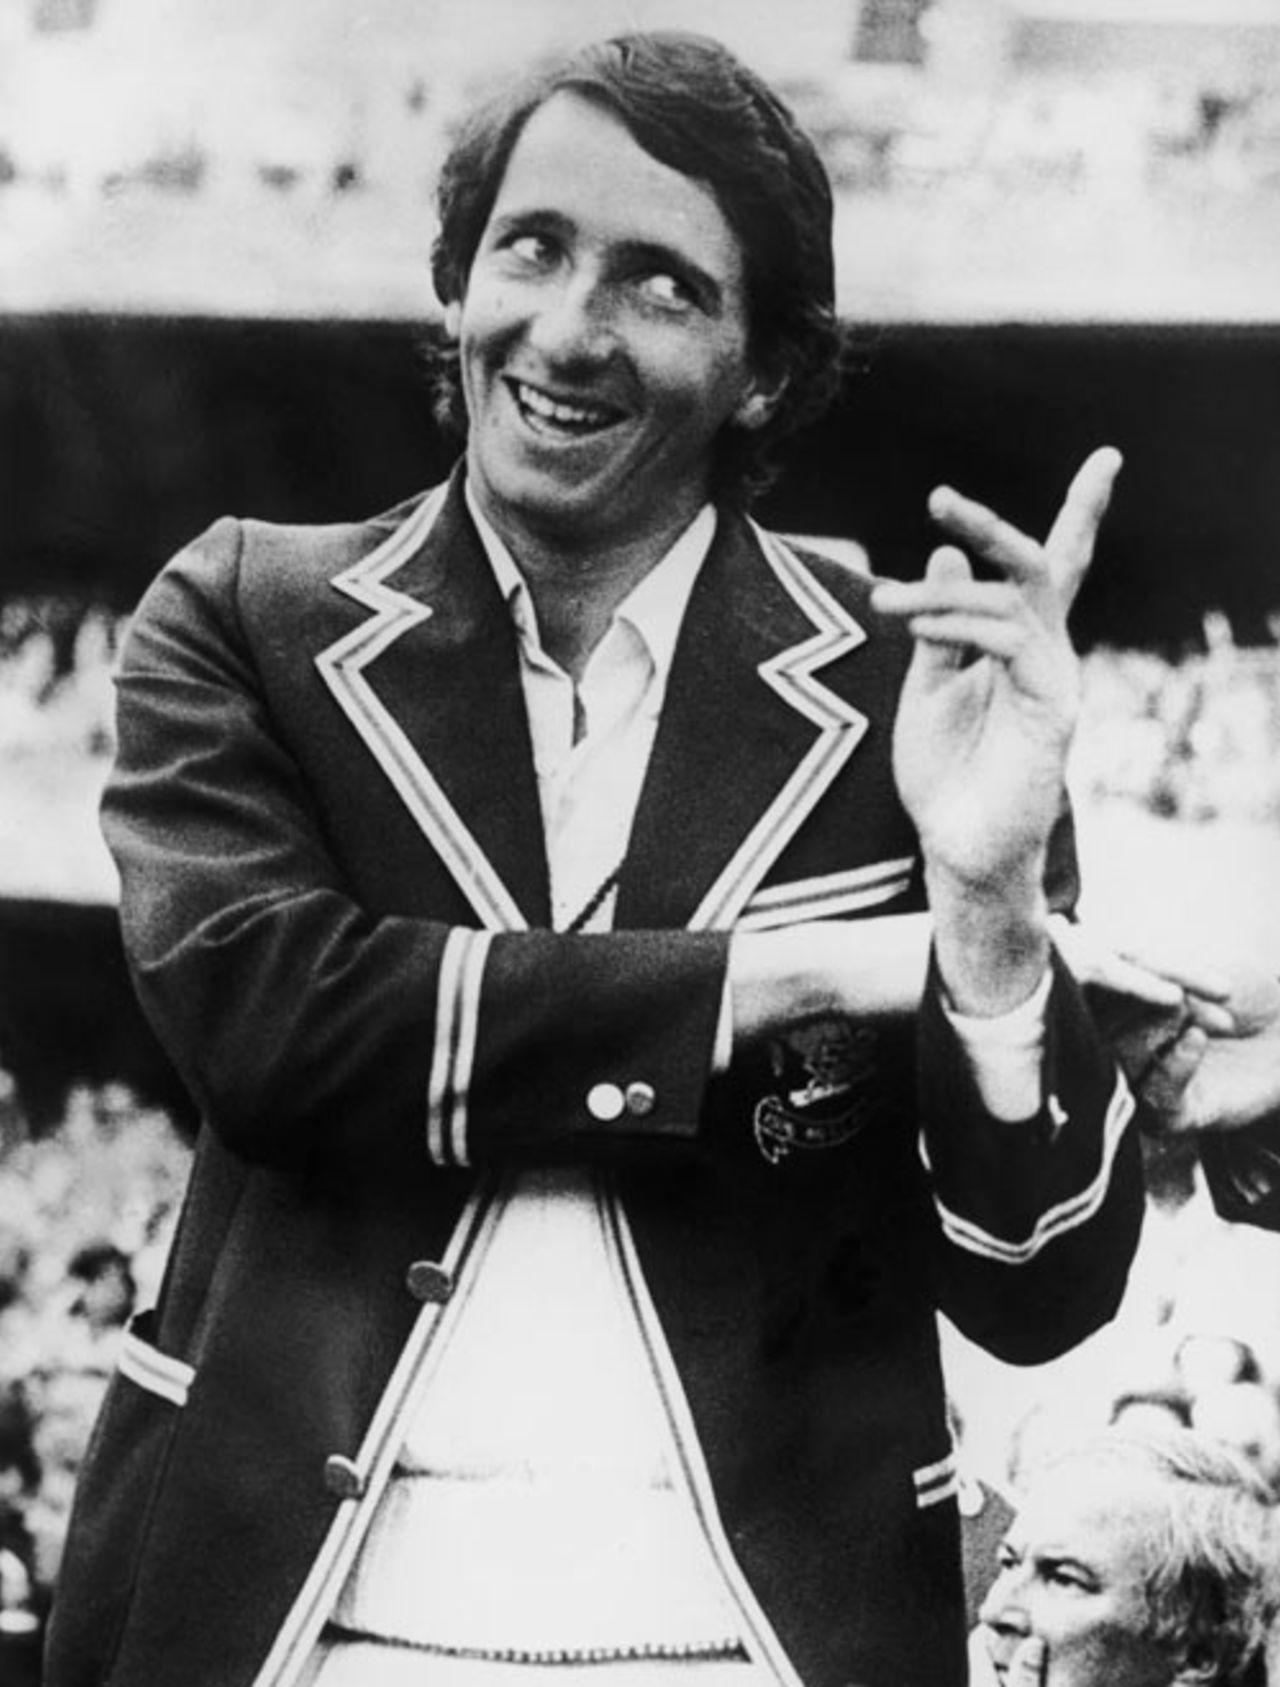 Derek Randall, the Man of the Match during the post-match presentation, enjoys a joke, Australia v England, Centenary Test, MCG, 22 March, 1977